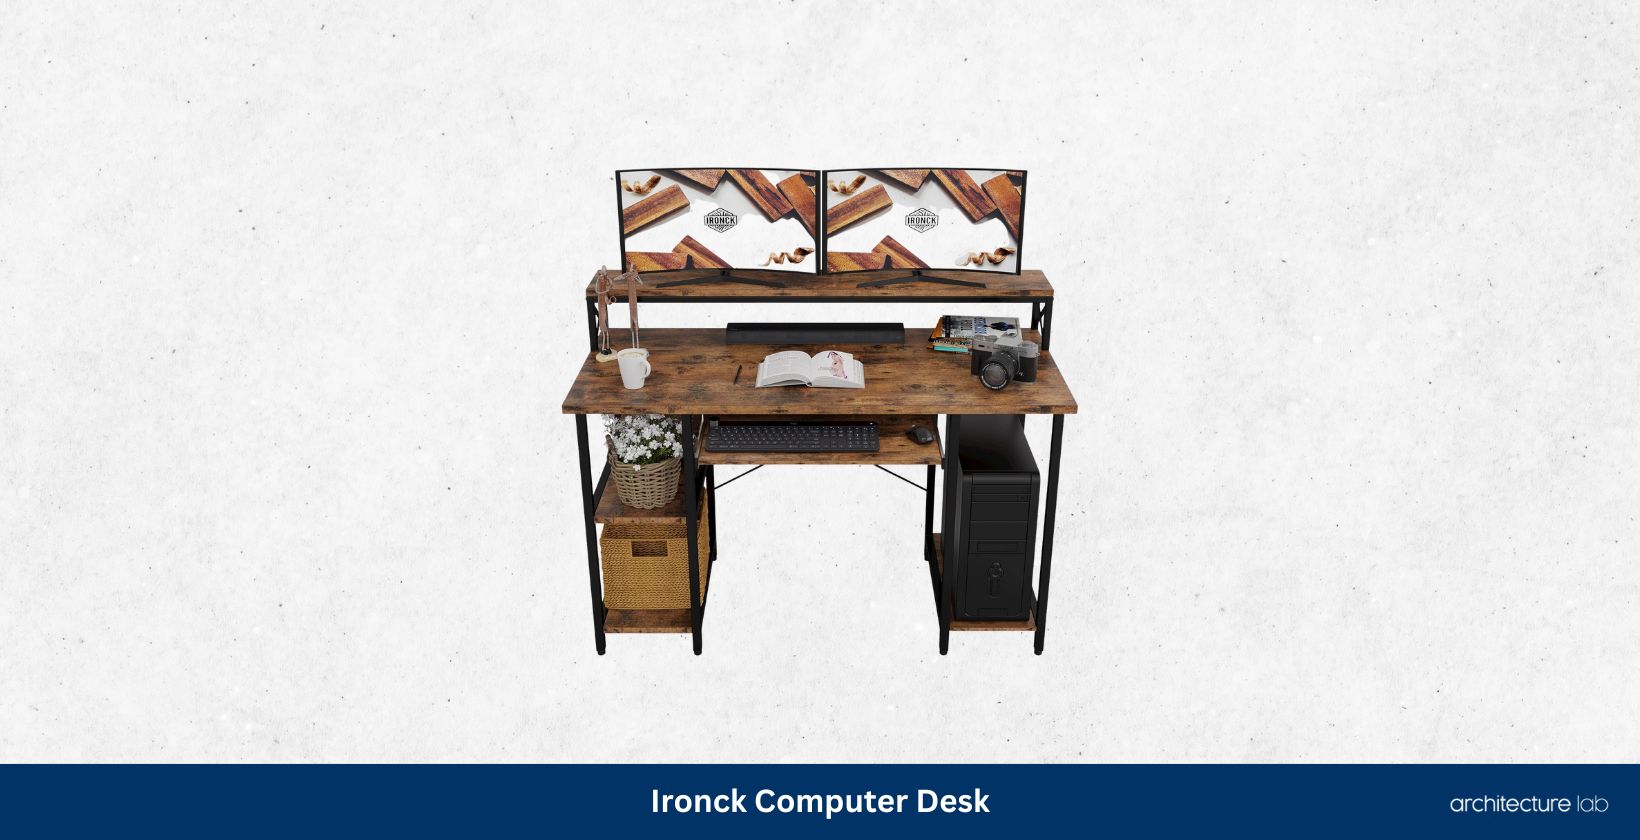 Ironck computer desk